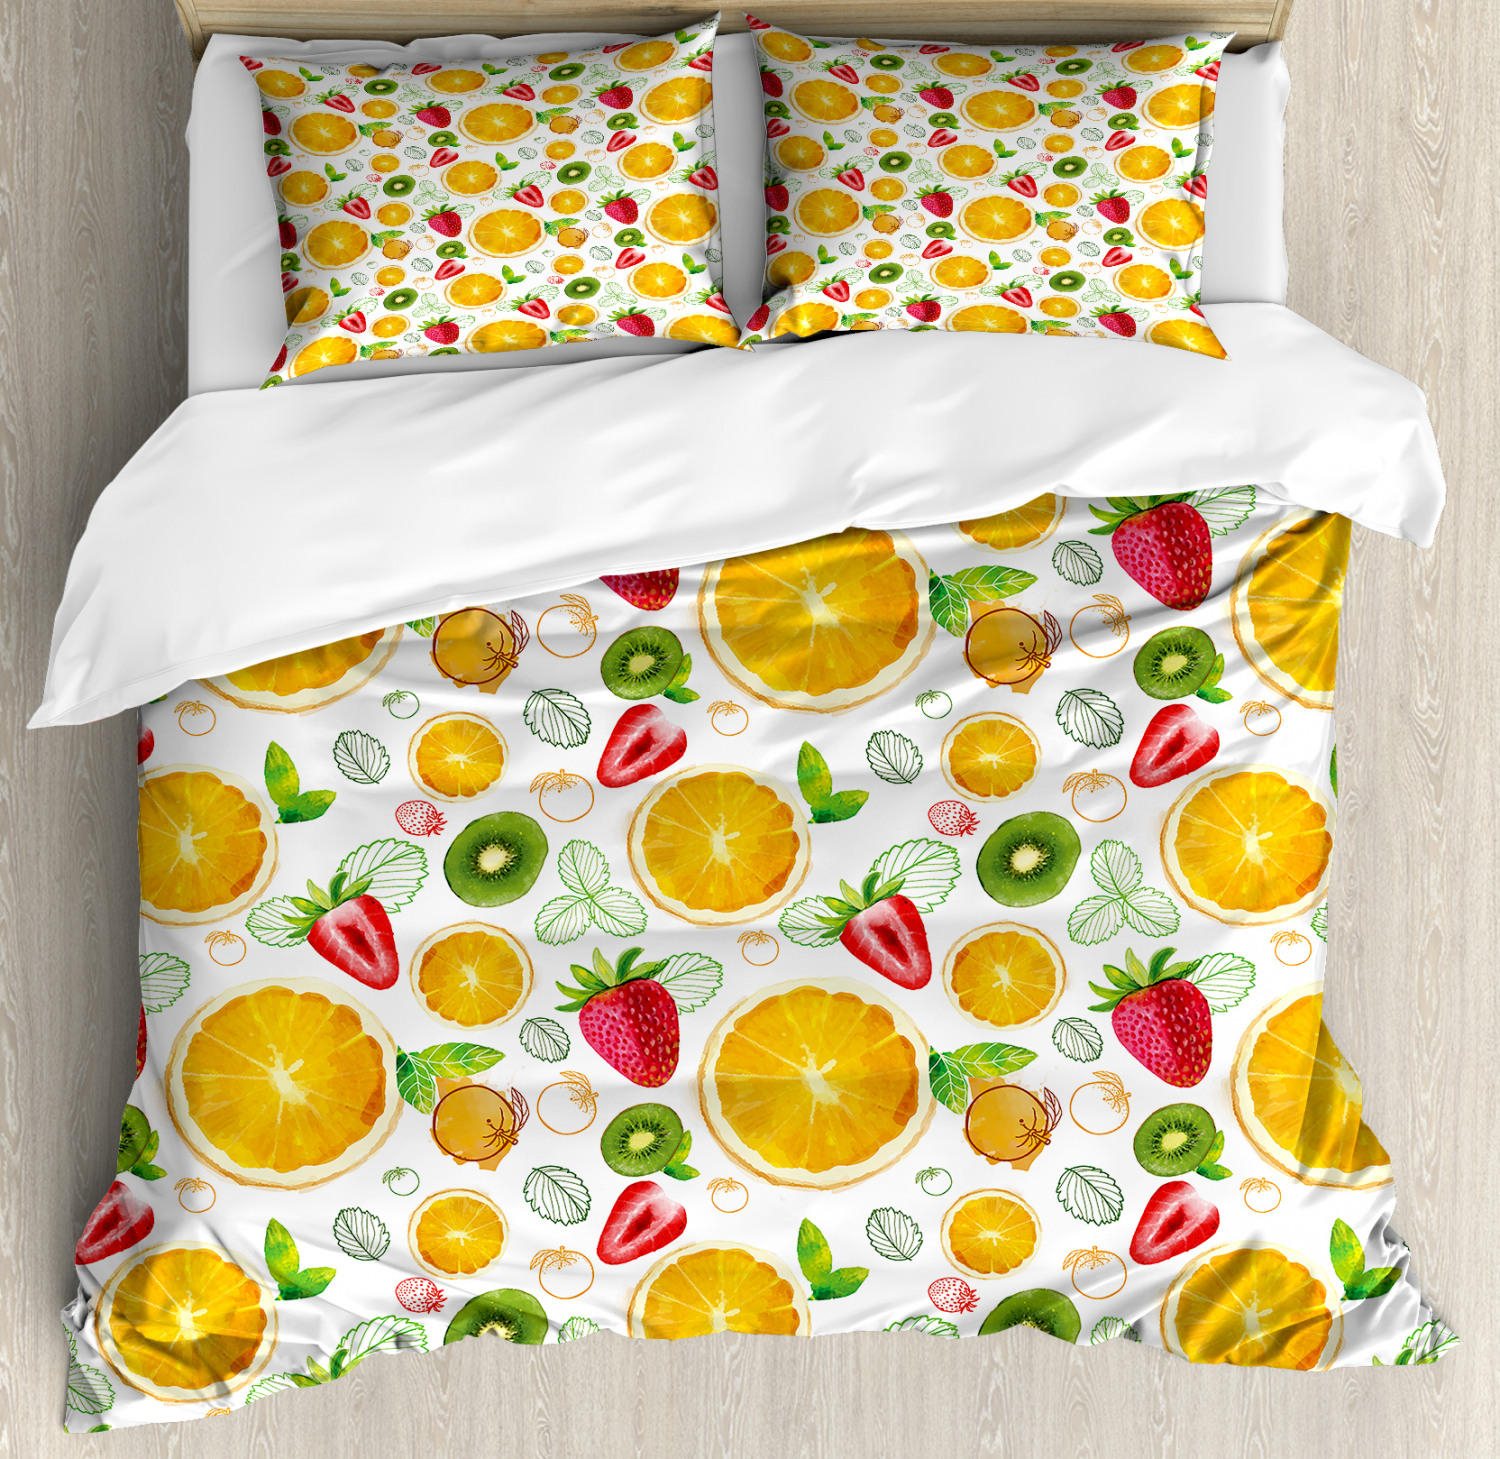 Fruits Duvet Cover Set With Pillow Shams Fresh Citrus Kiwi Lemon